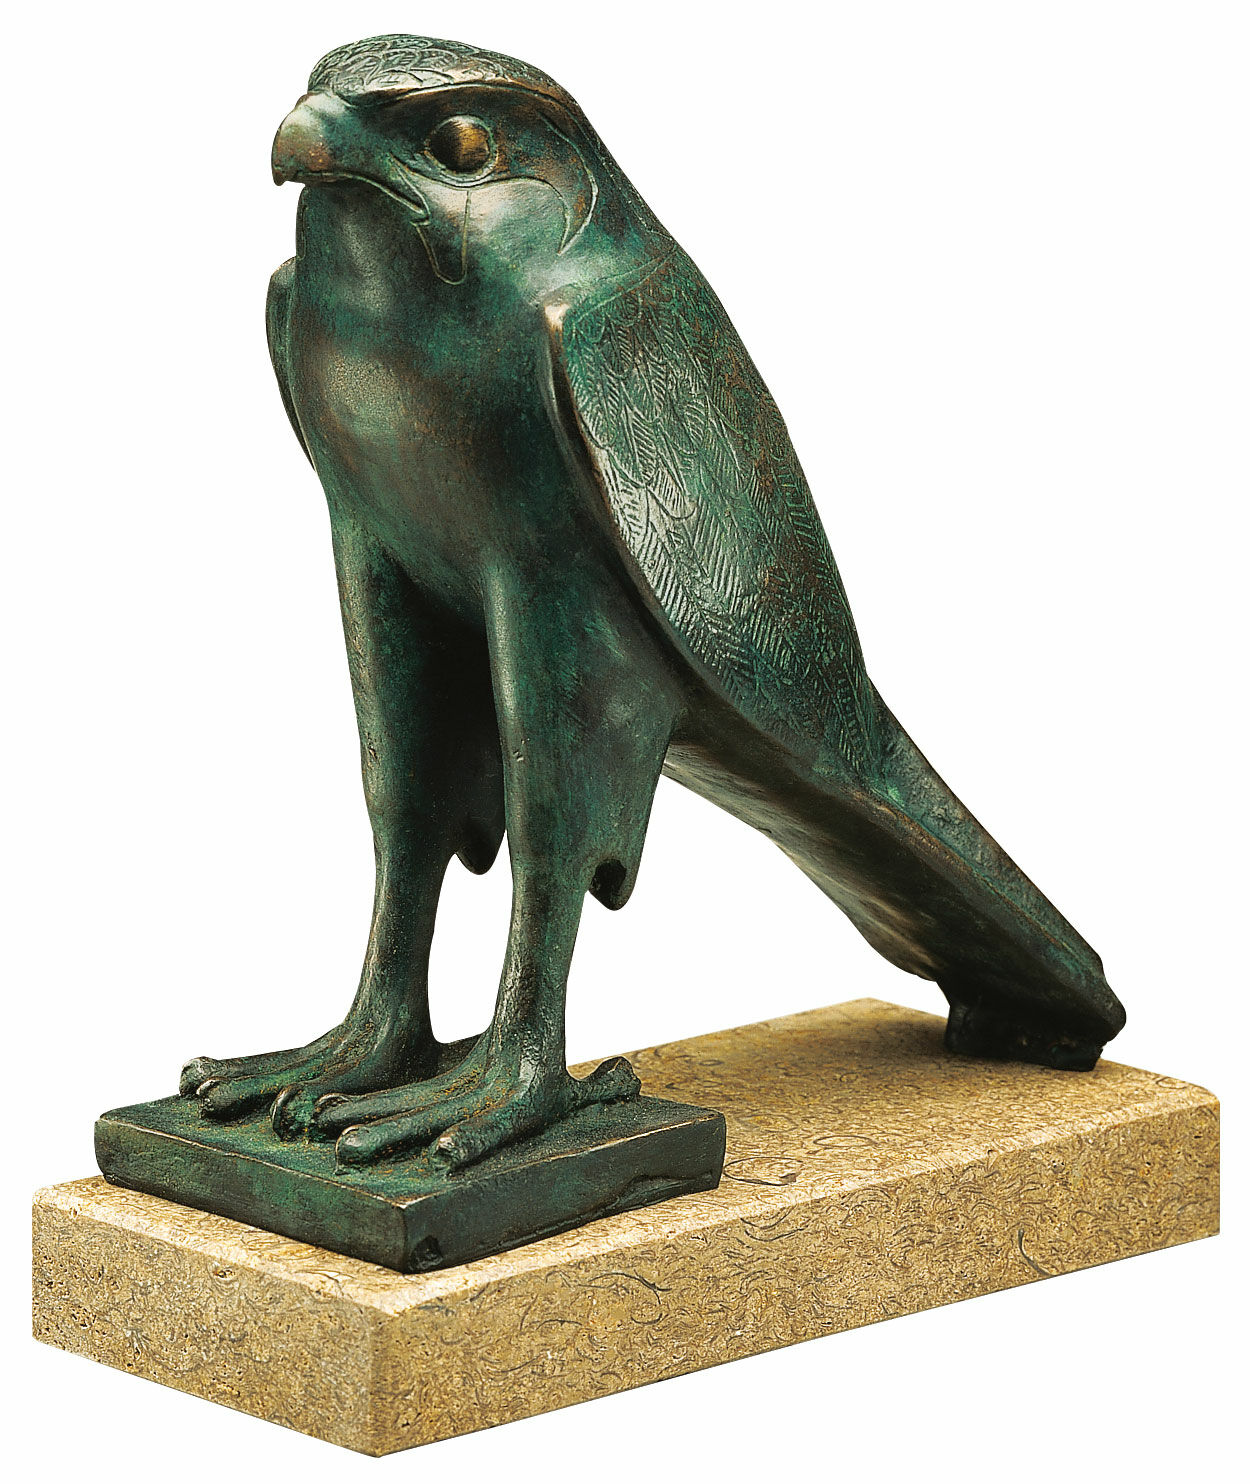 Skulptur "Horus Falcon", bronzeversion